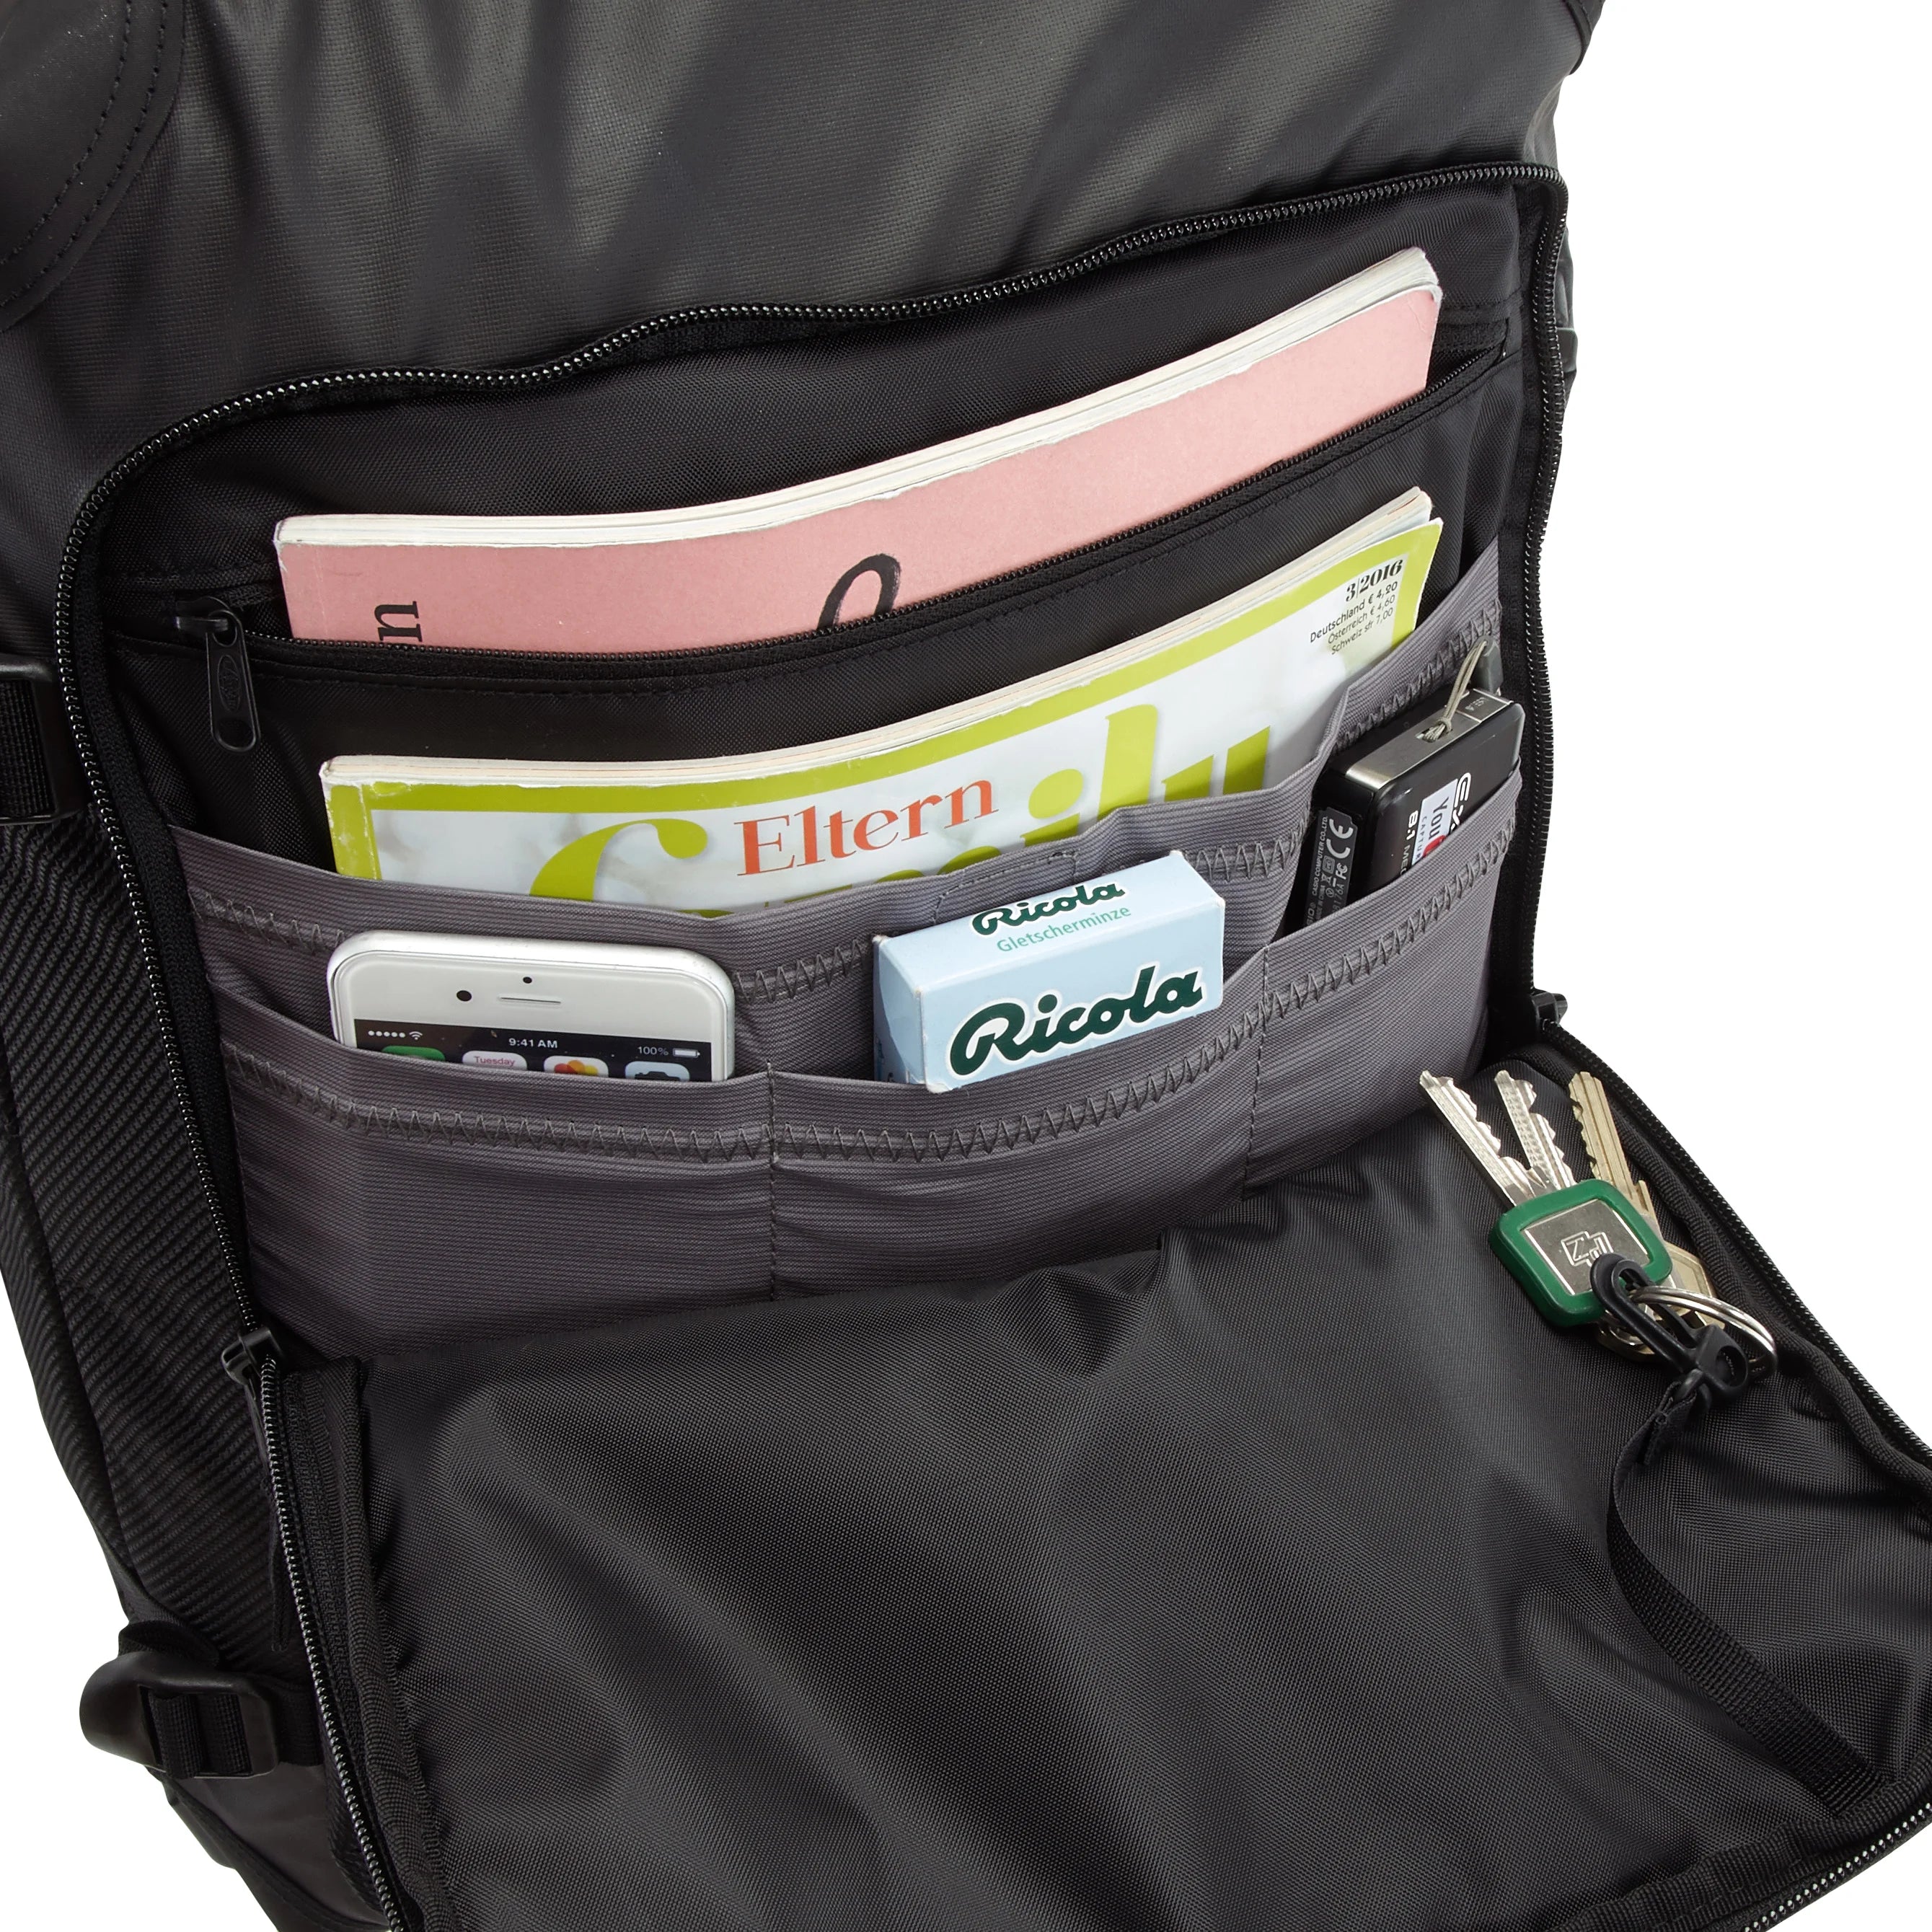 Eastpak Authentic Travel Tranverz CNNCT Rolling Travel Bag 51 cm - Accent Grey